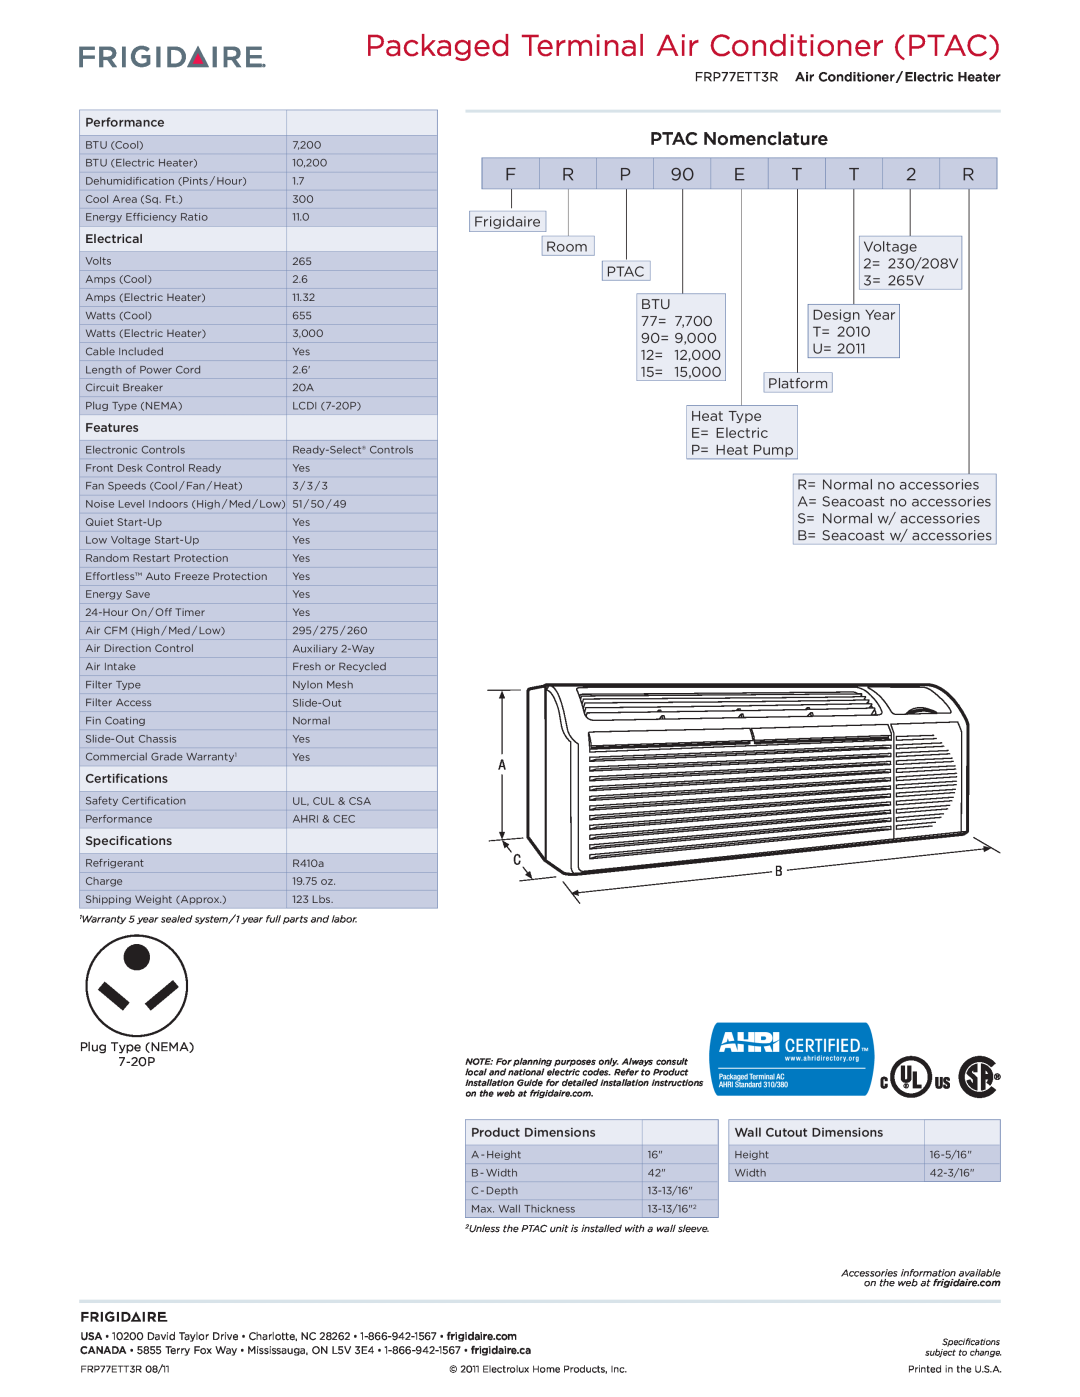 Frigidaire FRP77ETT3R dimensions Packaged Terminal Air Conditioner PTAC, PTAC Nomenclature 